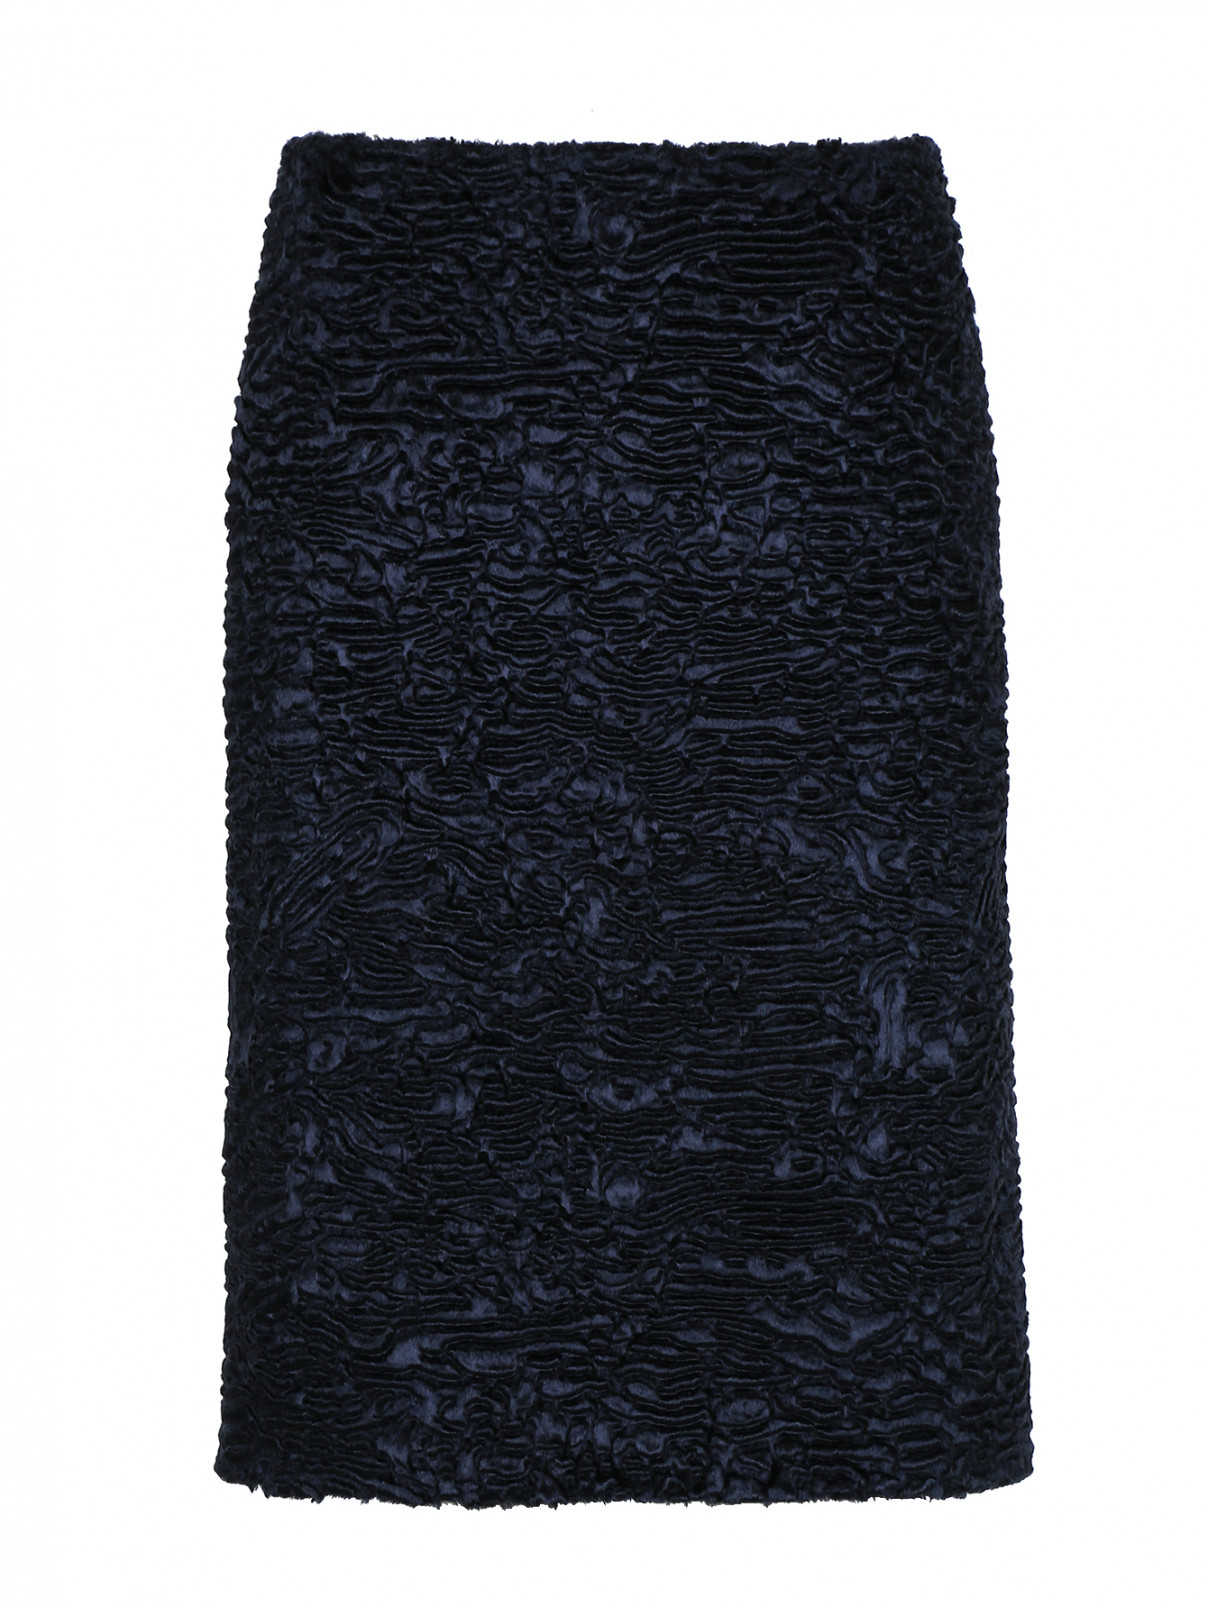 Юбка-карандаш из фактурной ткани S Max Mara  –  Общий вид  – Цвет:  Синий